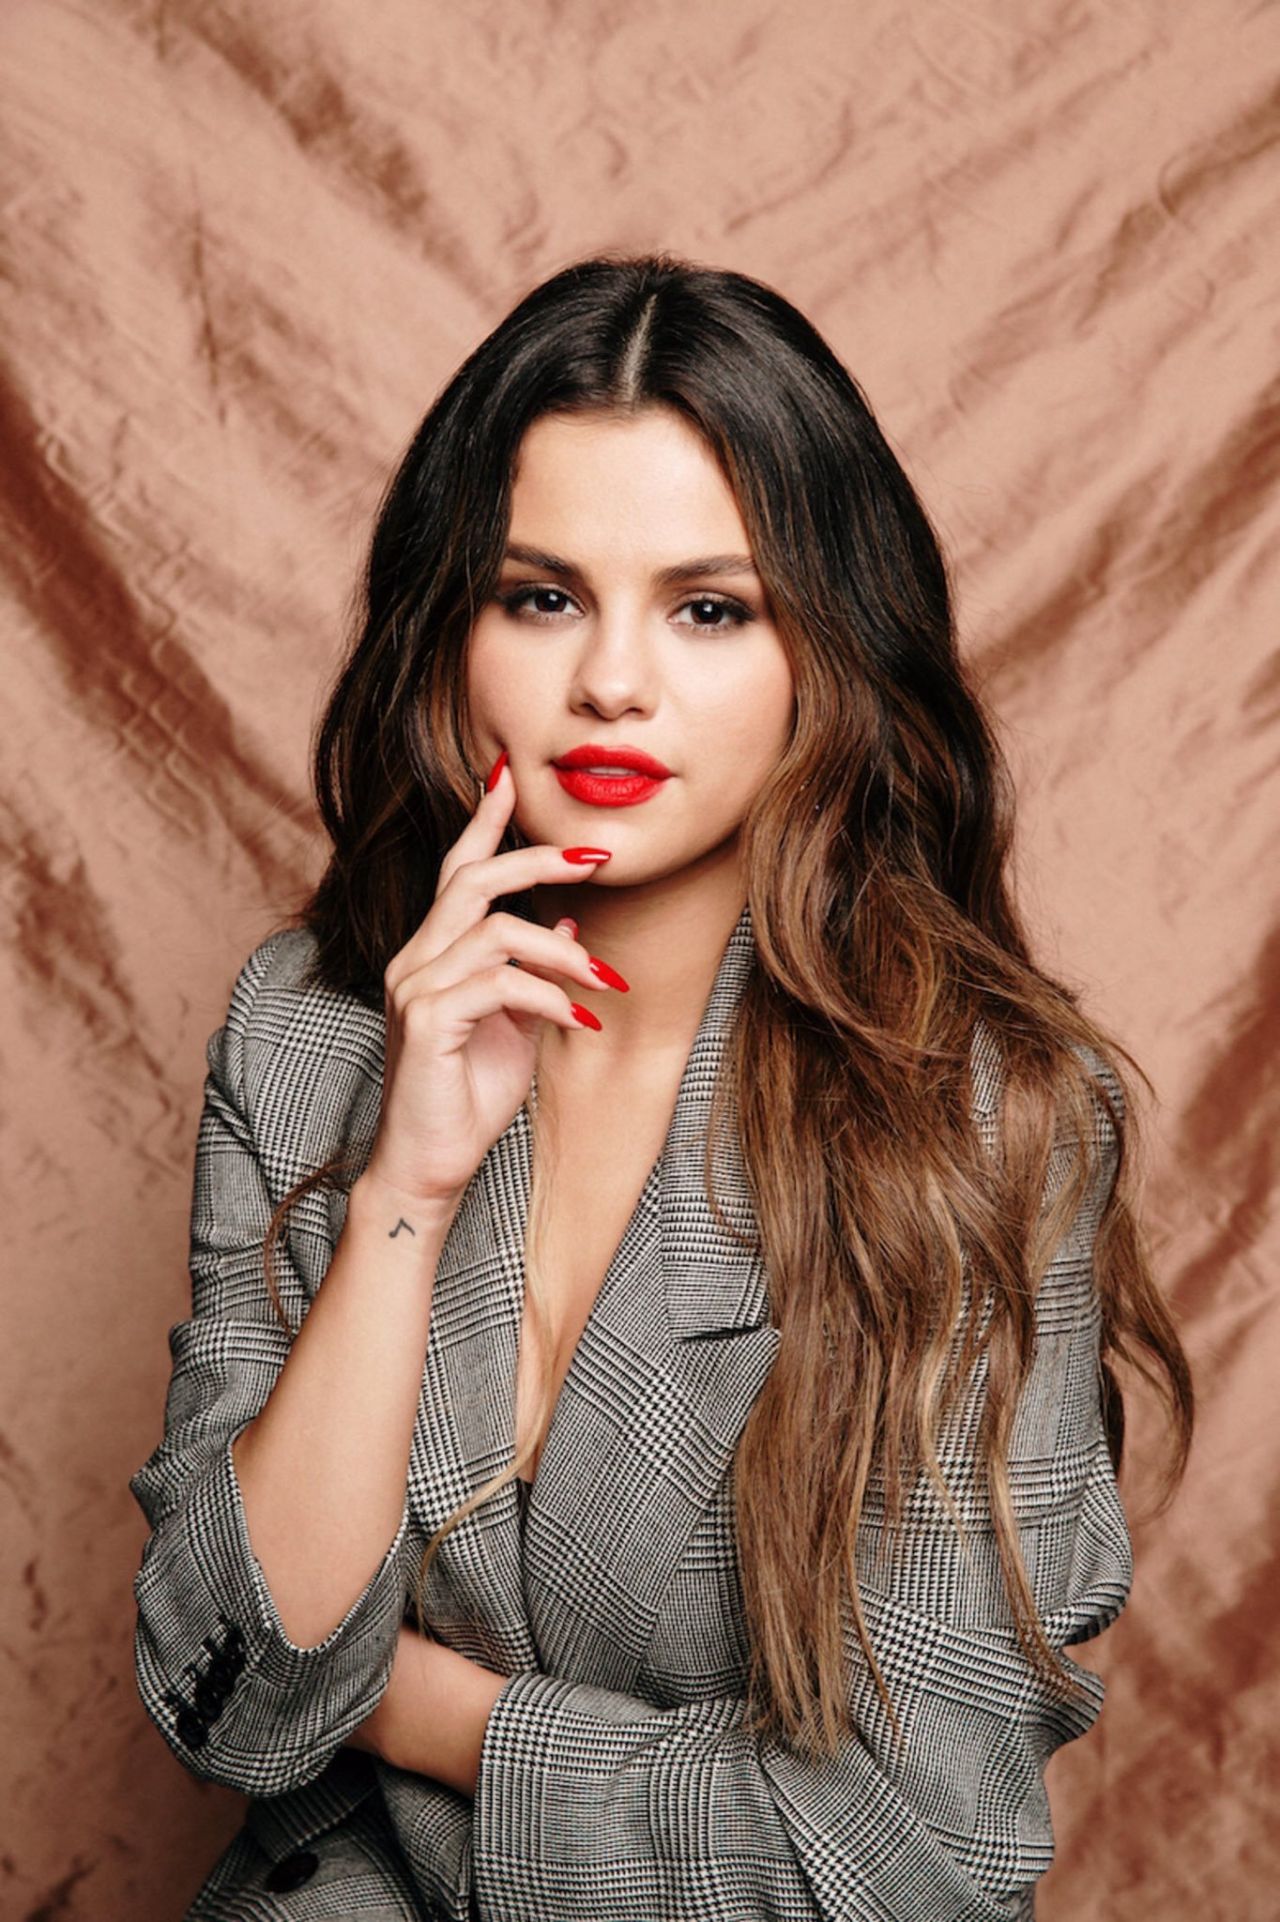 Selena Gomez - Iheartradio New York Portrait, November 2019